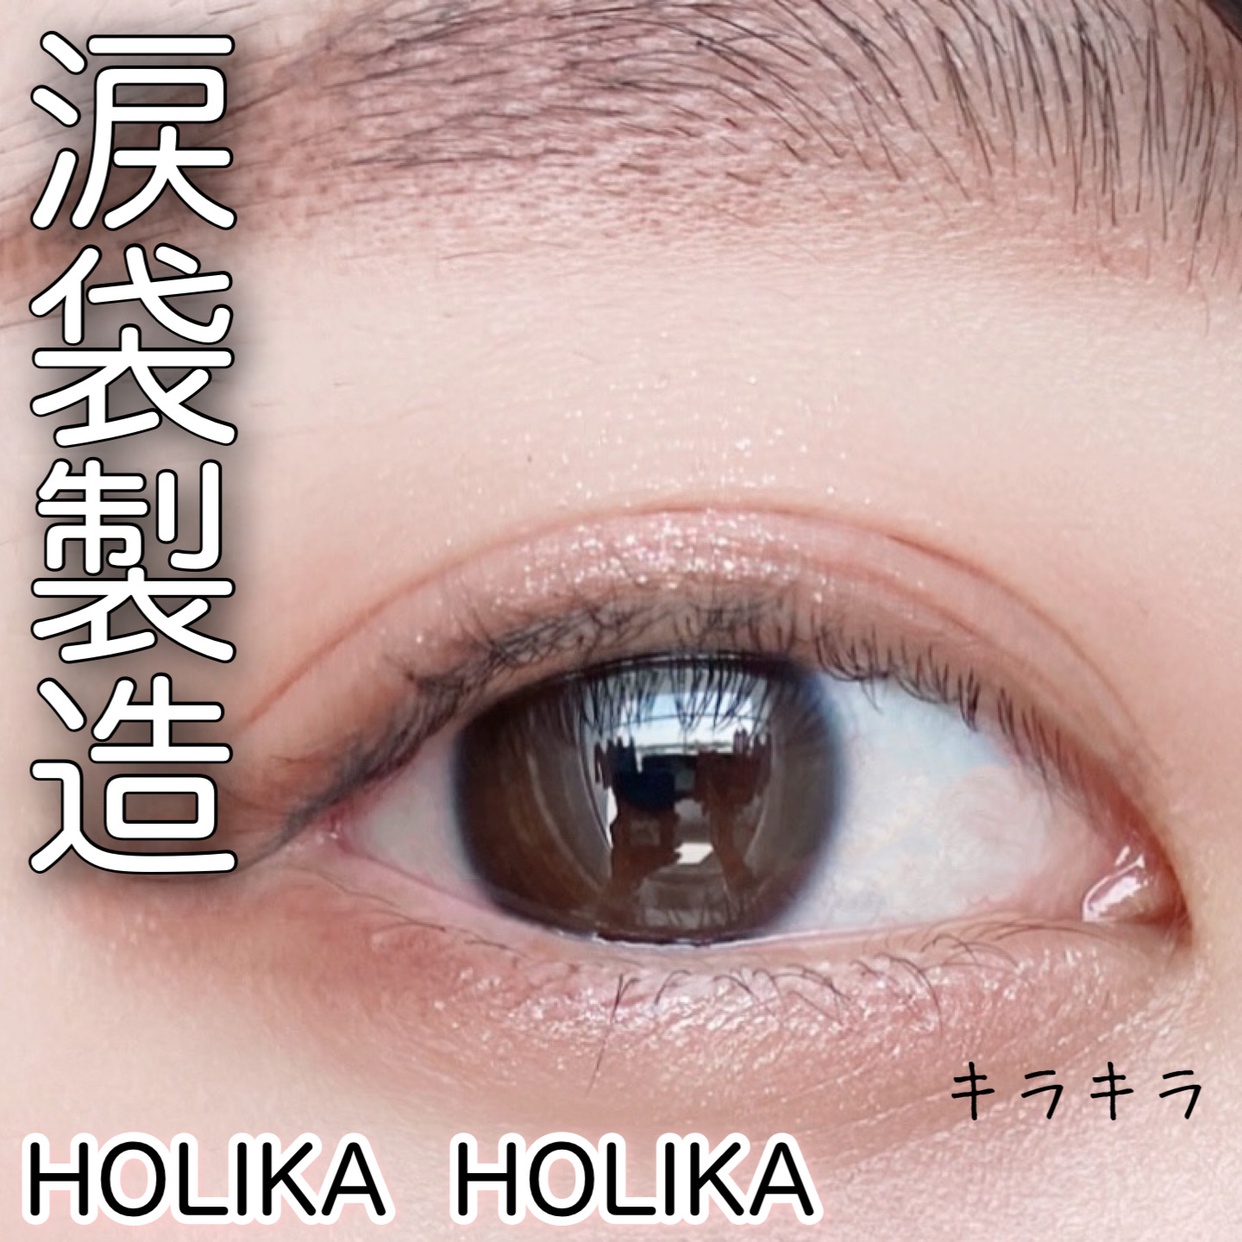 HOLIKA HOLIKA(ホリカホリカ) ジュエル ライト アンダー アイメーカーを使ったyunaさんのクチコミ画像1